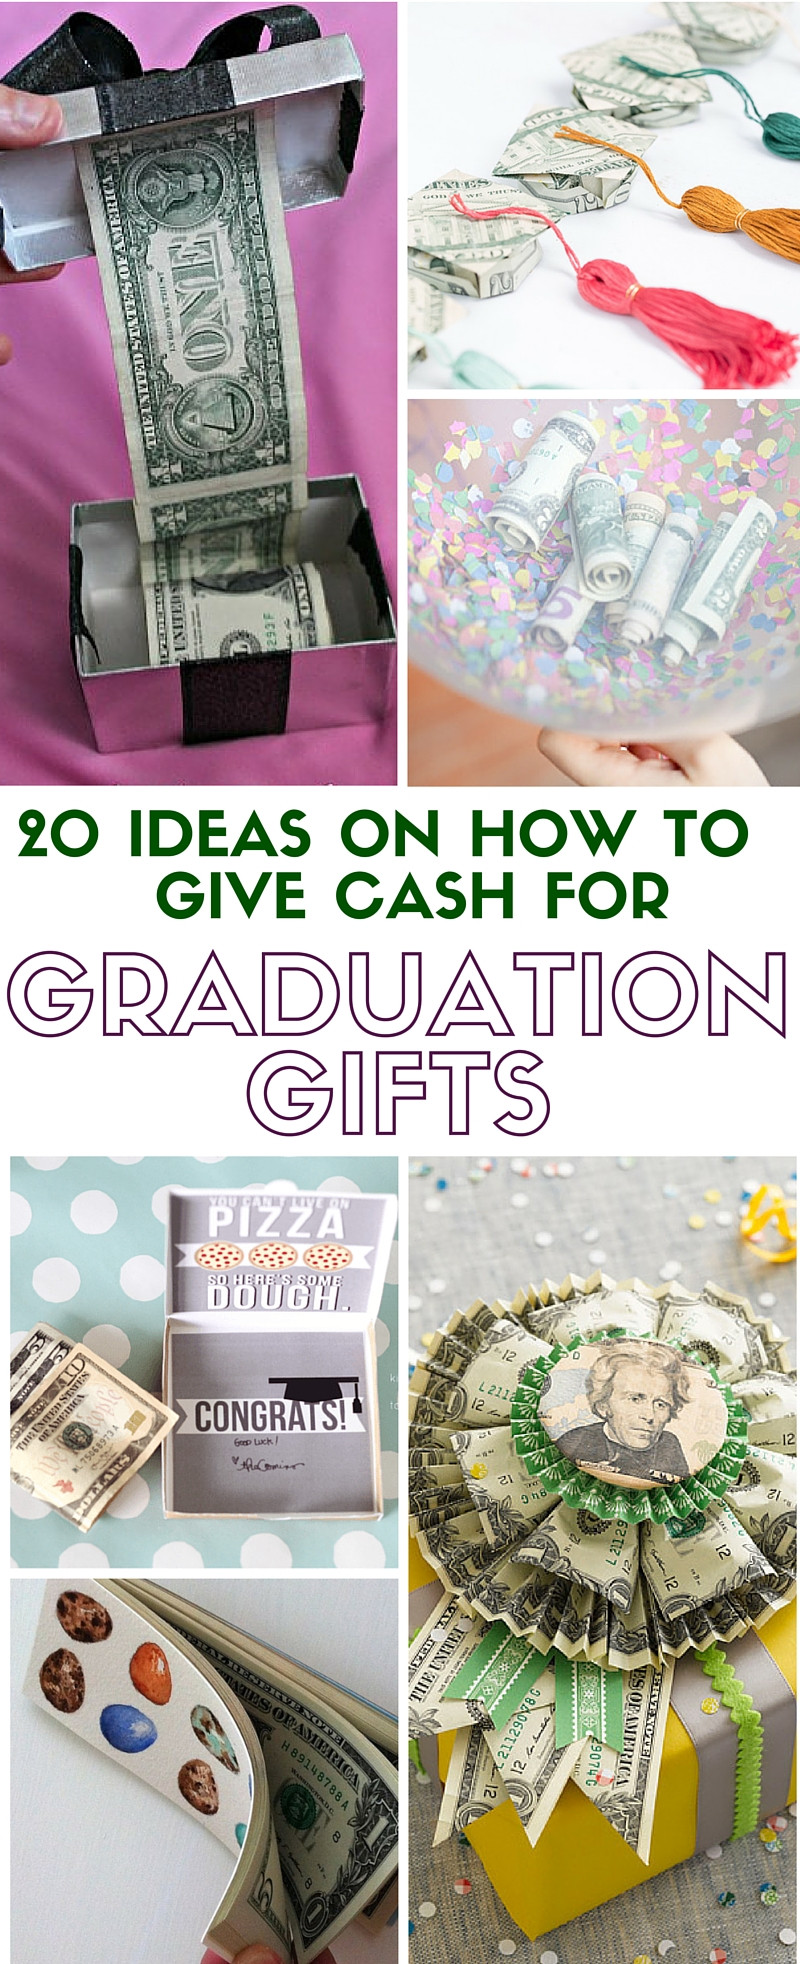 Gift Ideas For Graduation
 31 Back To School Teacher Gift Ideas The Crafty Blog Stalker